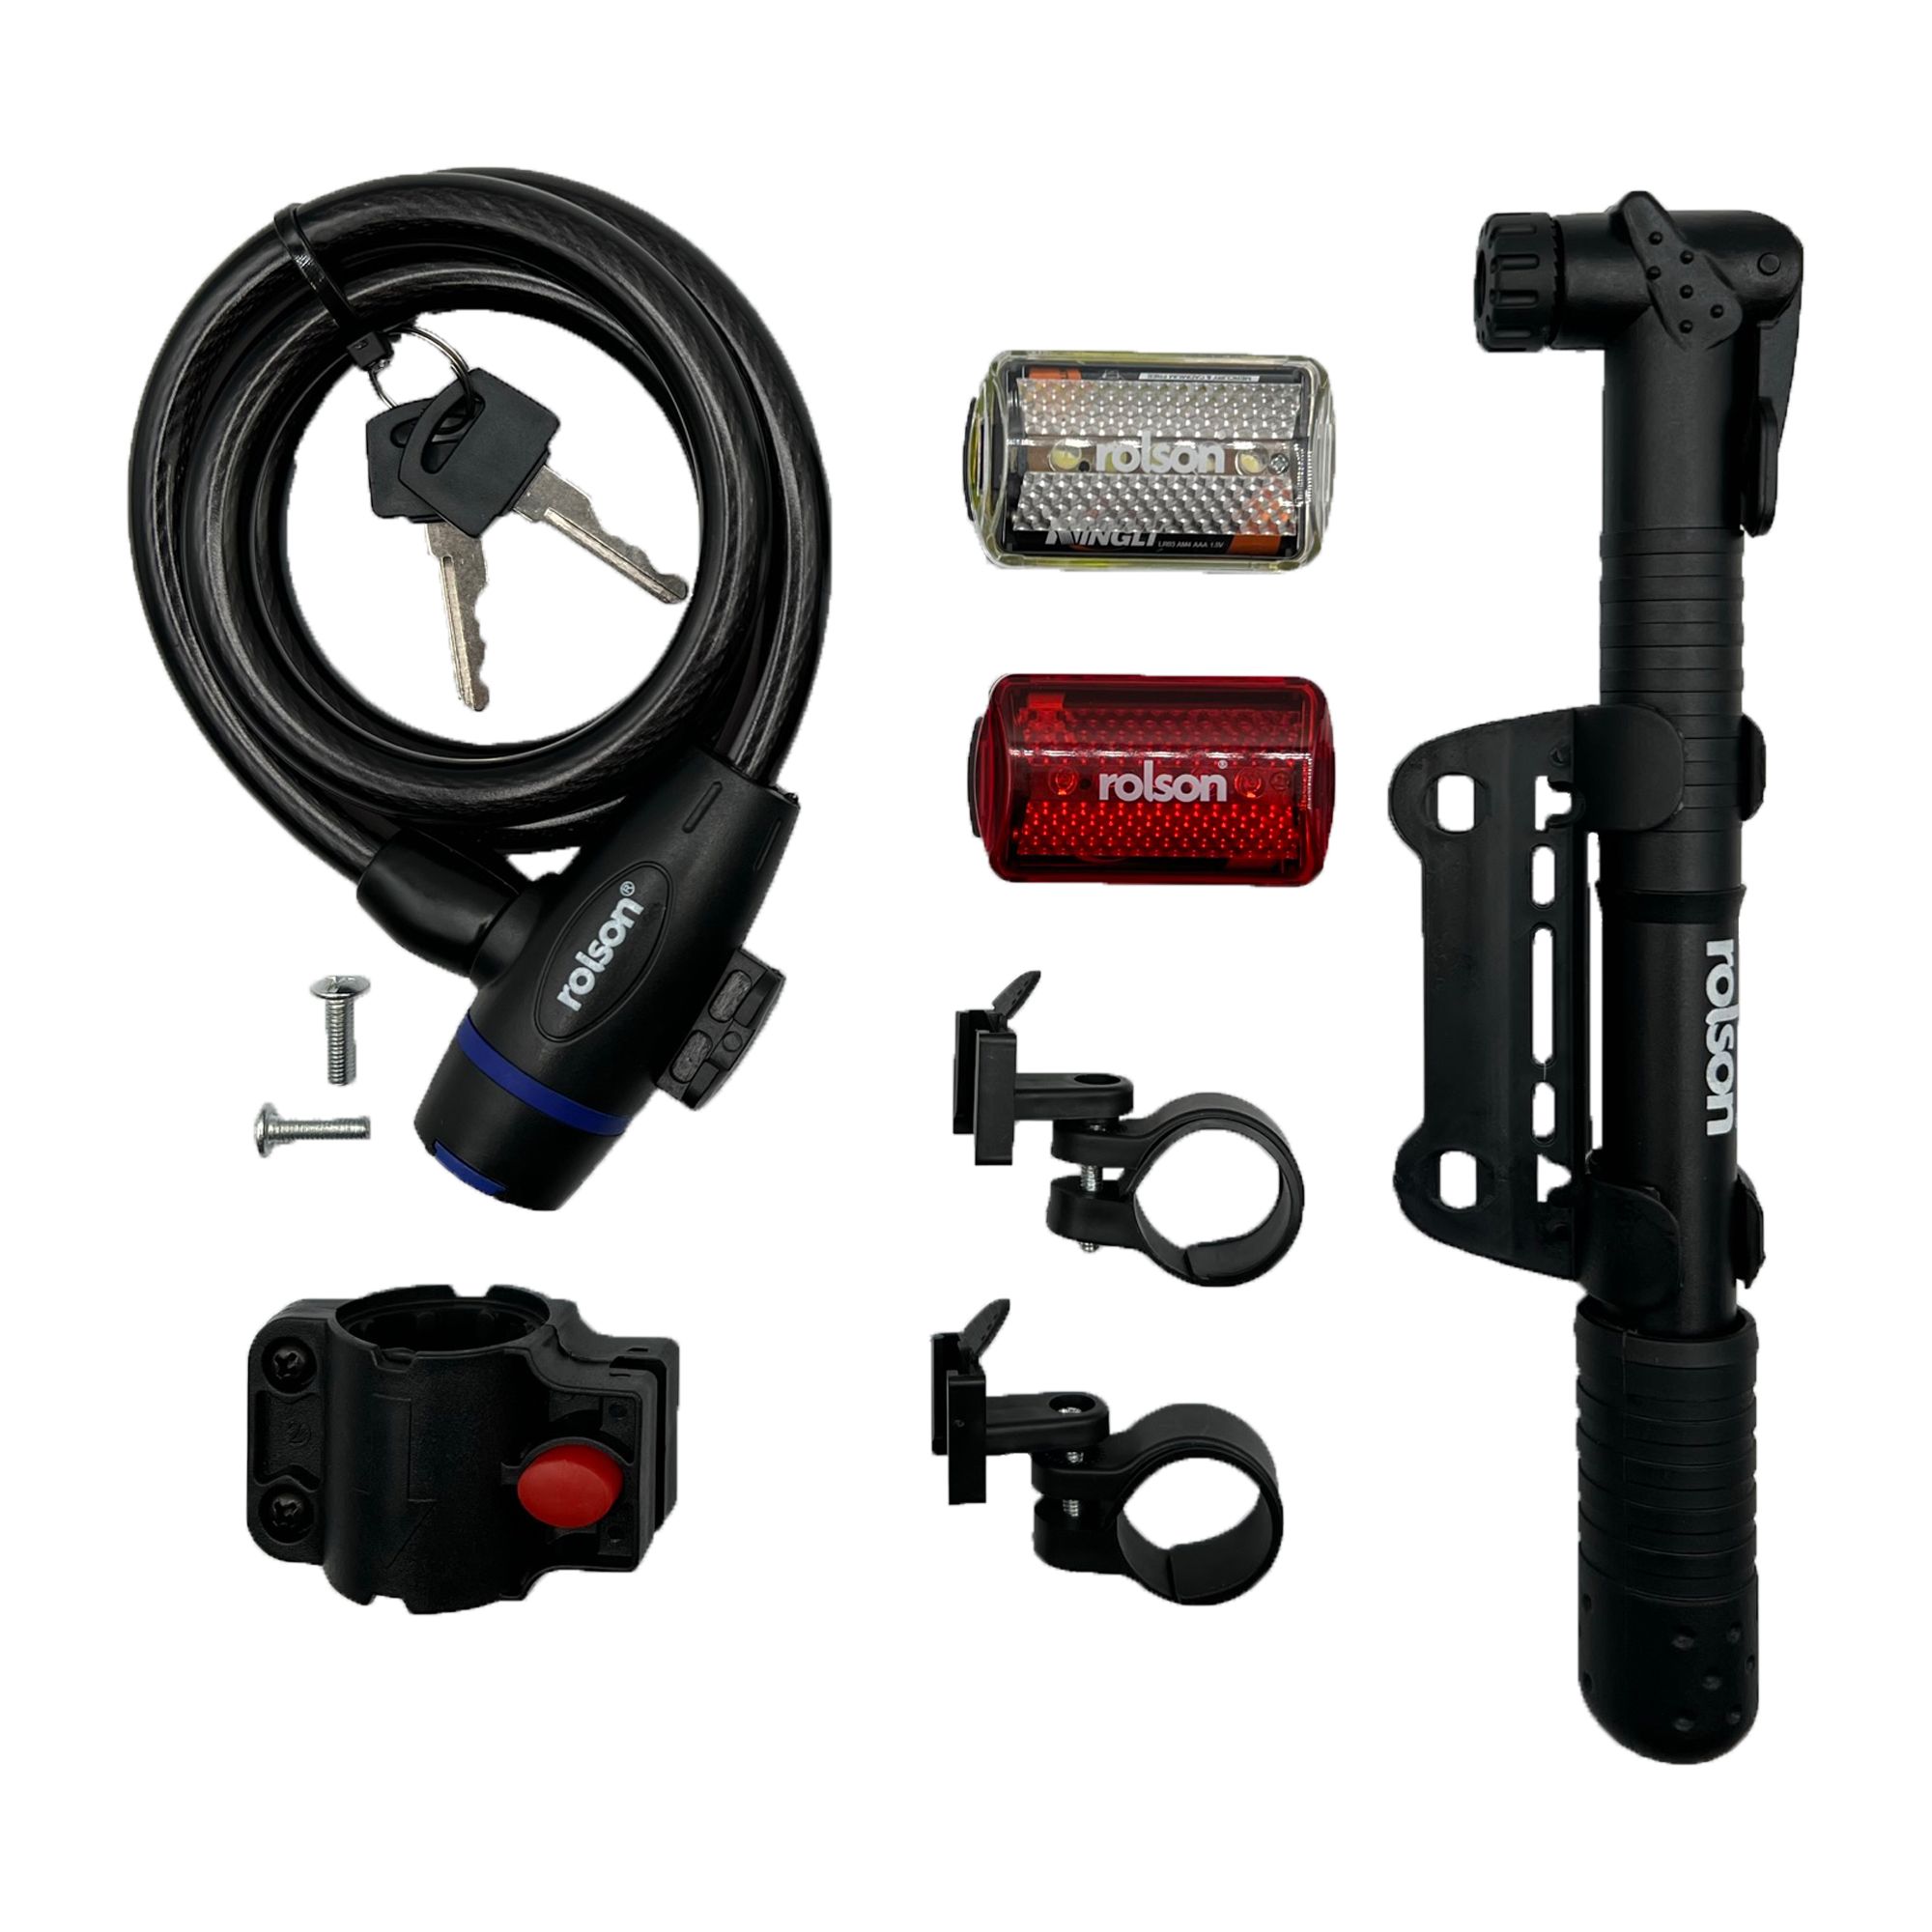 Bike Accessories Kit 66765 : all need lights, pump and lock Tools